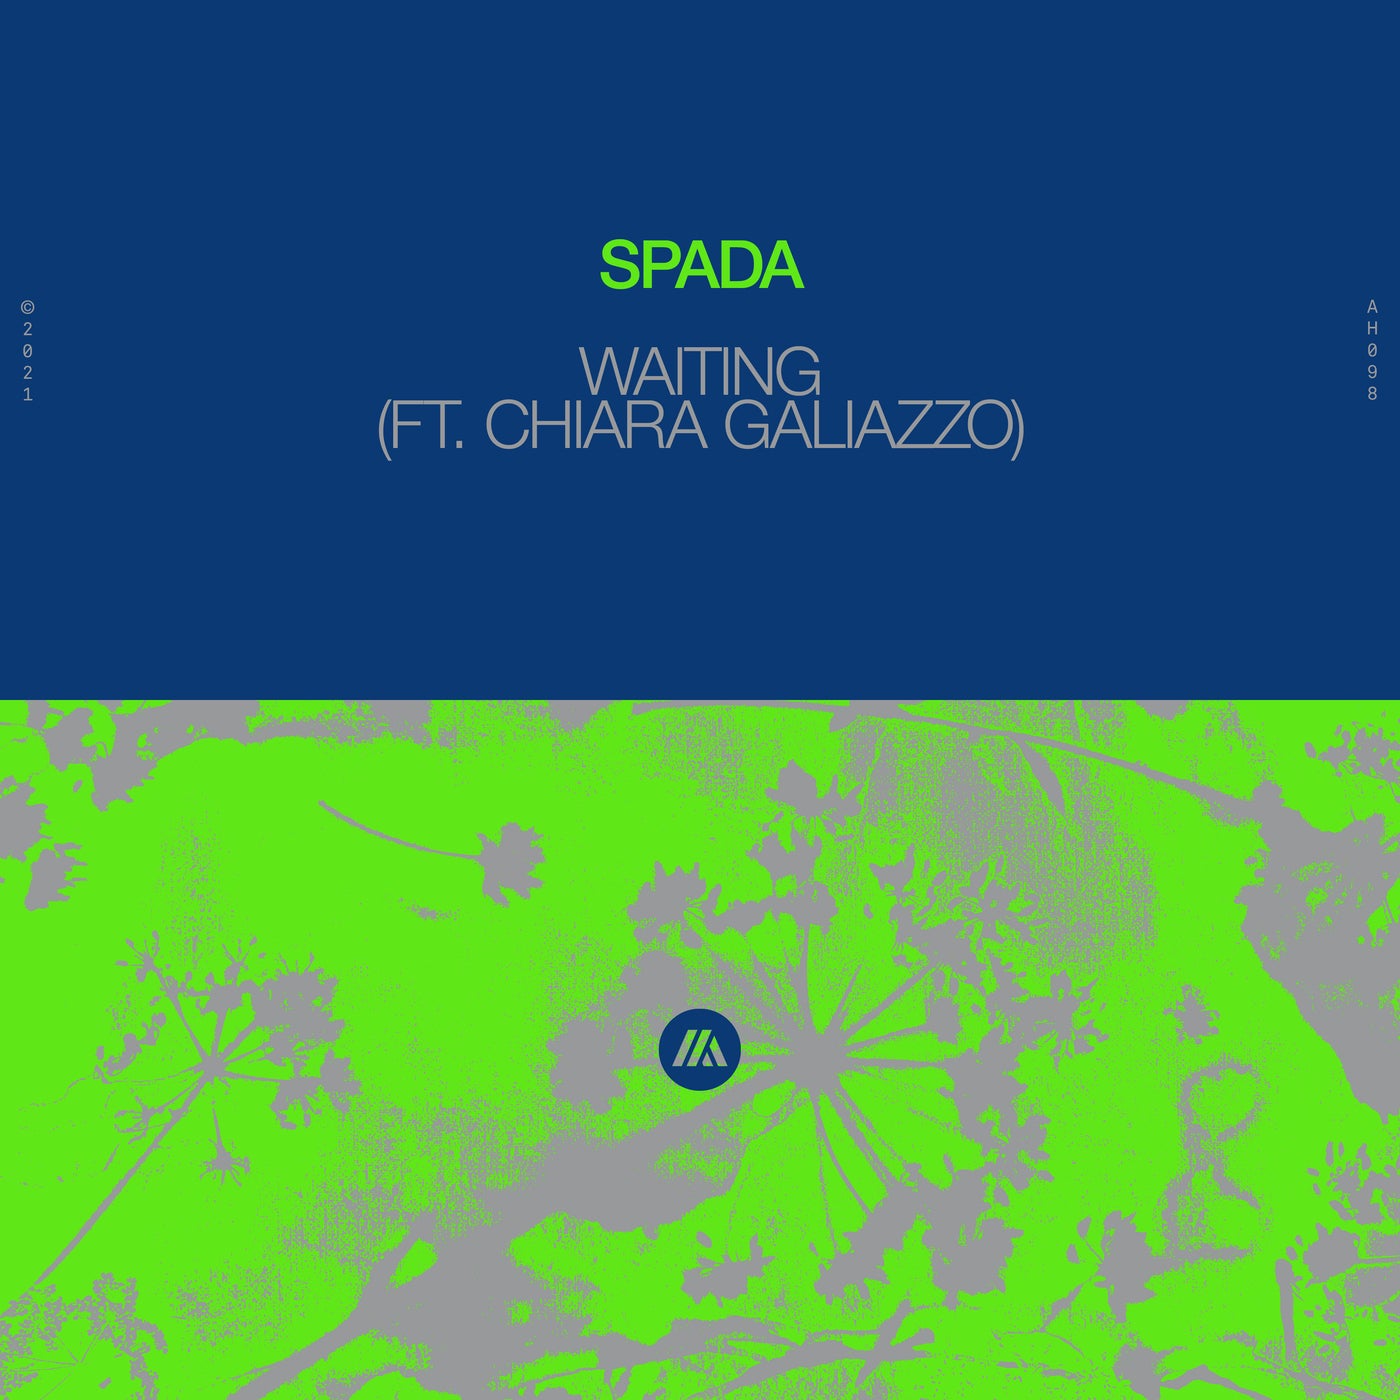 Spada, Chiara Galiazzo – Waiting (feat. Chiara Galiazzo) [Extended Mix]